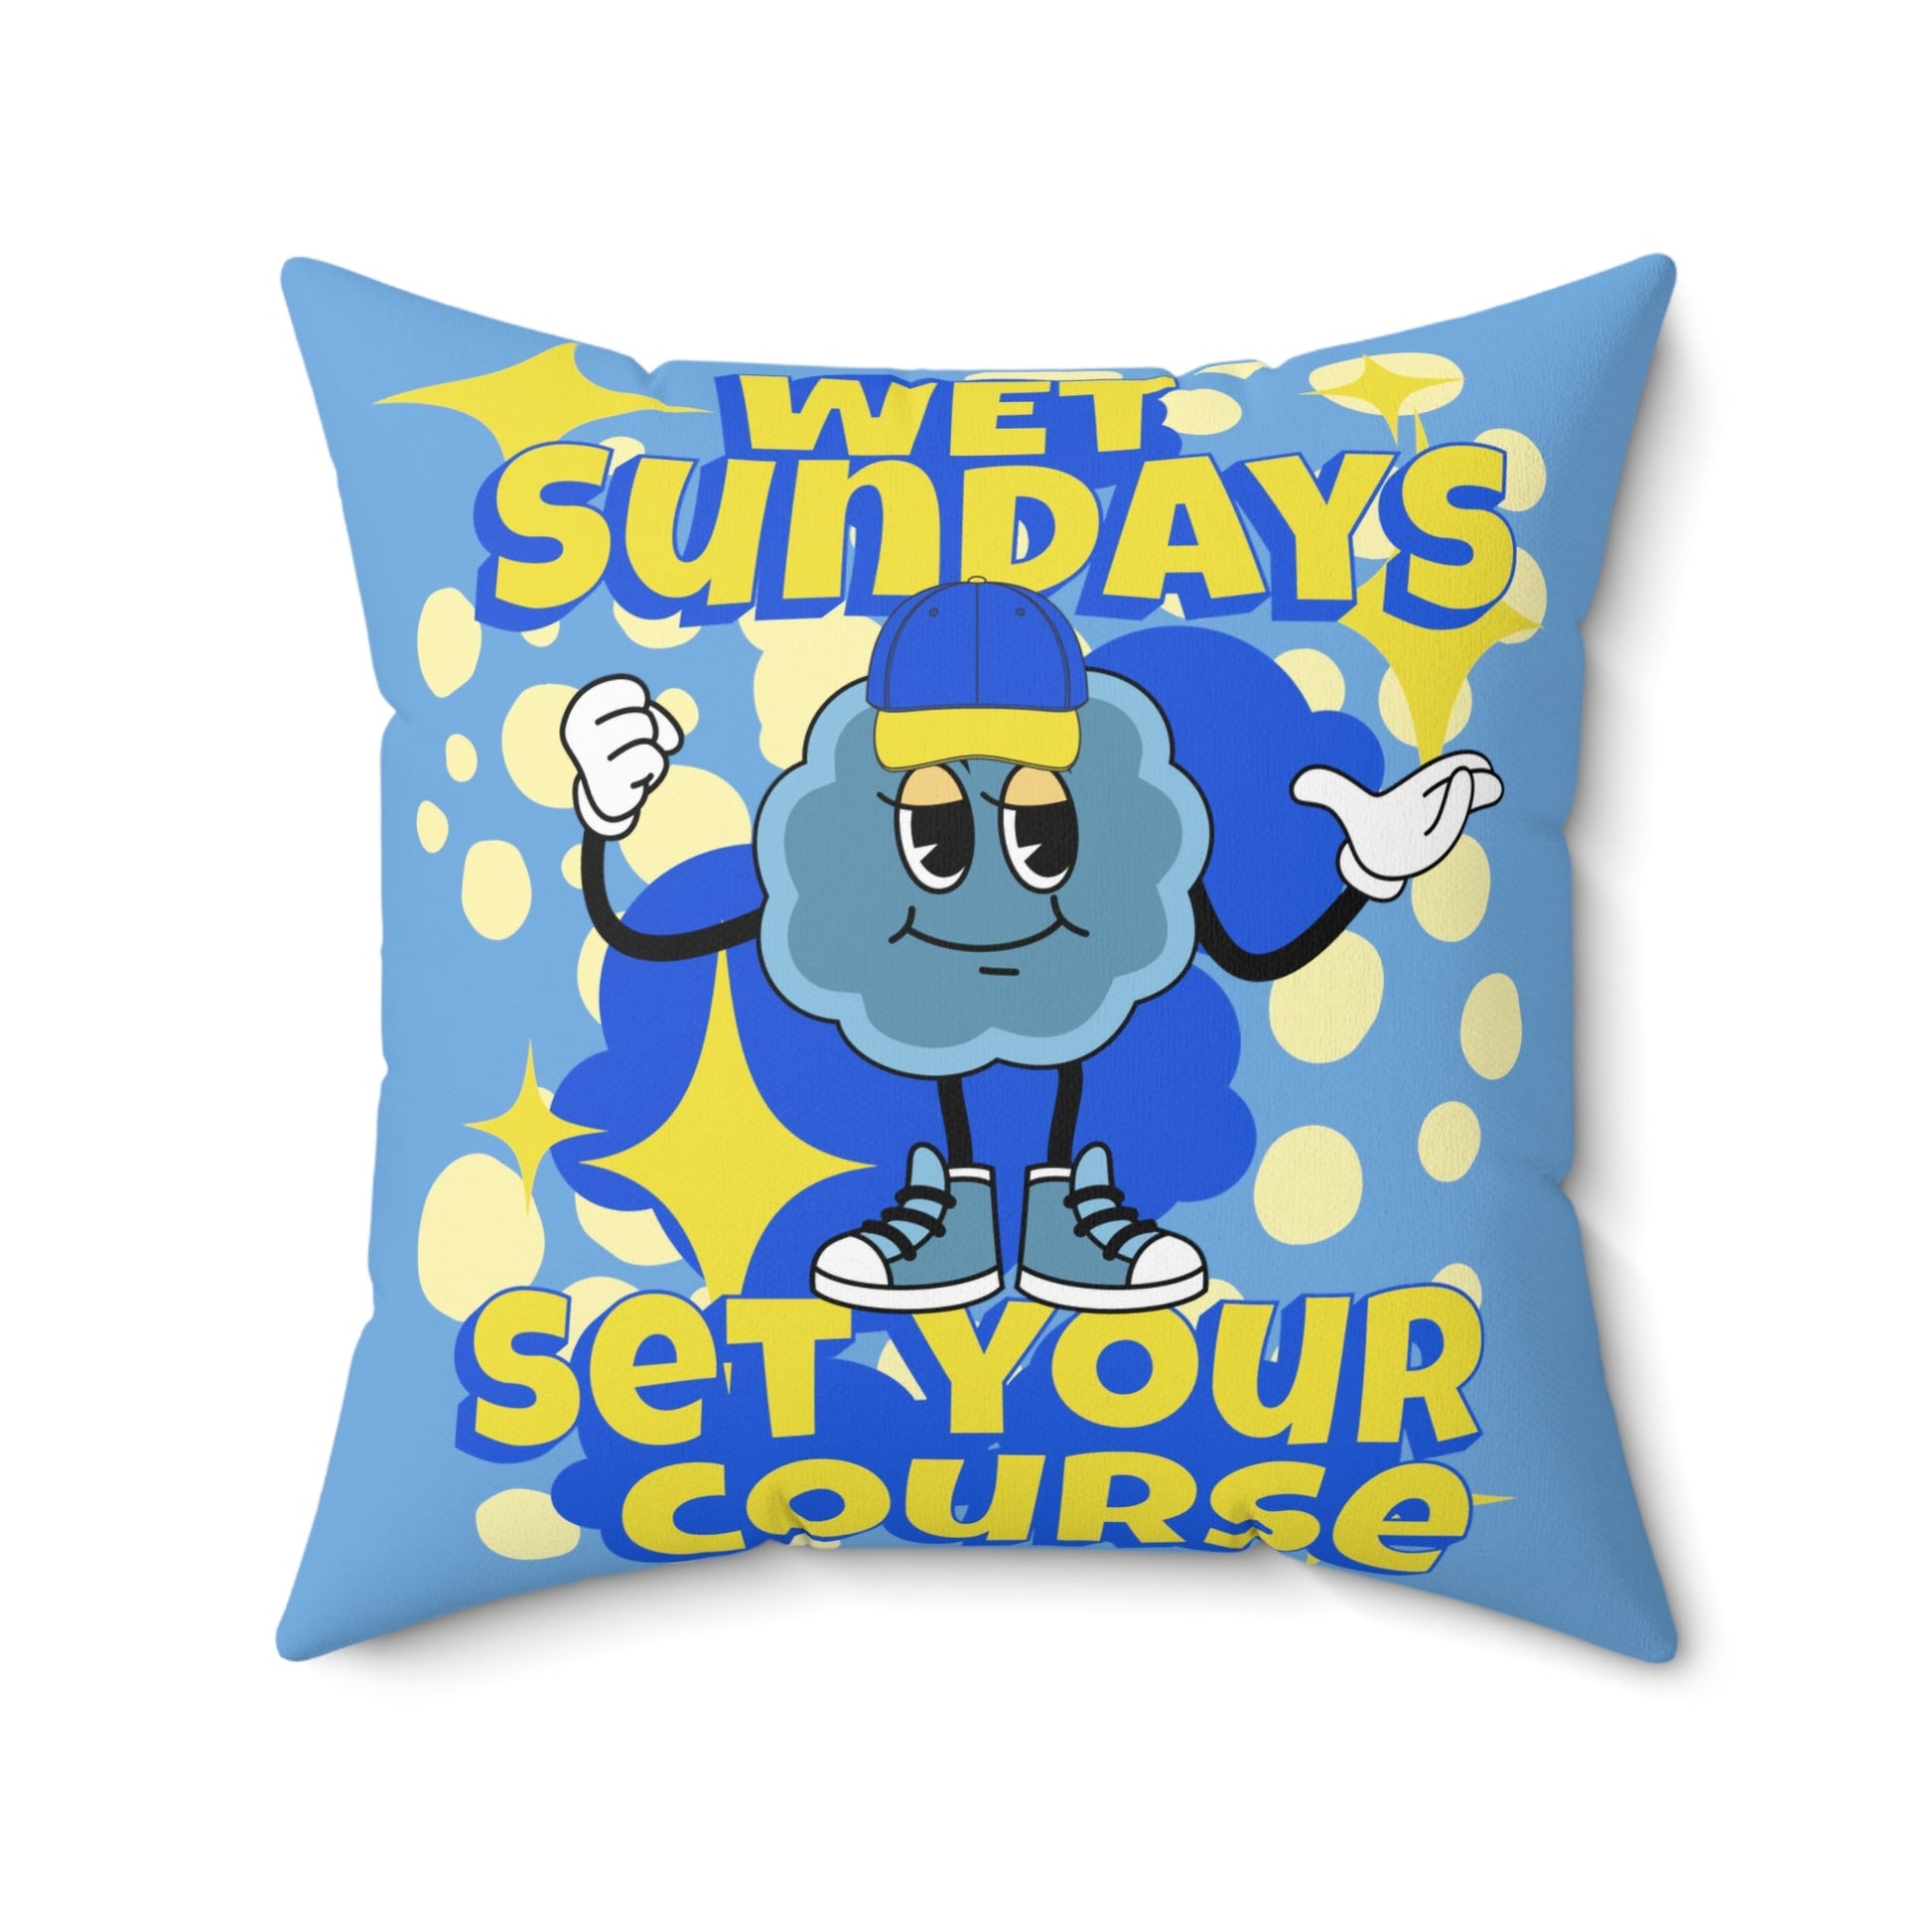 Cartoon Sunday Square Pillow - Wet Sundays